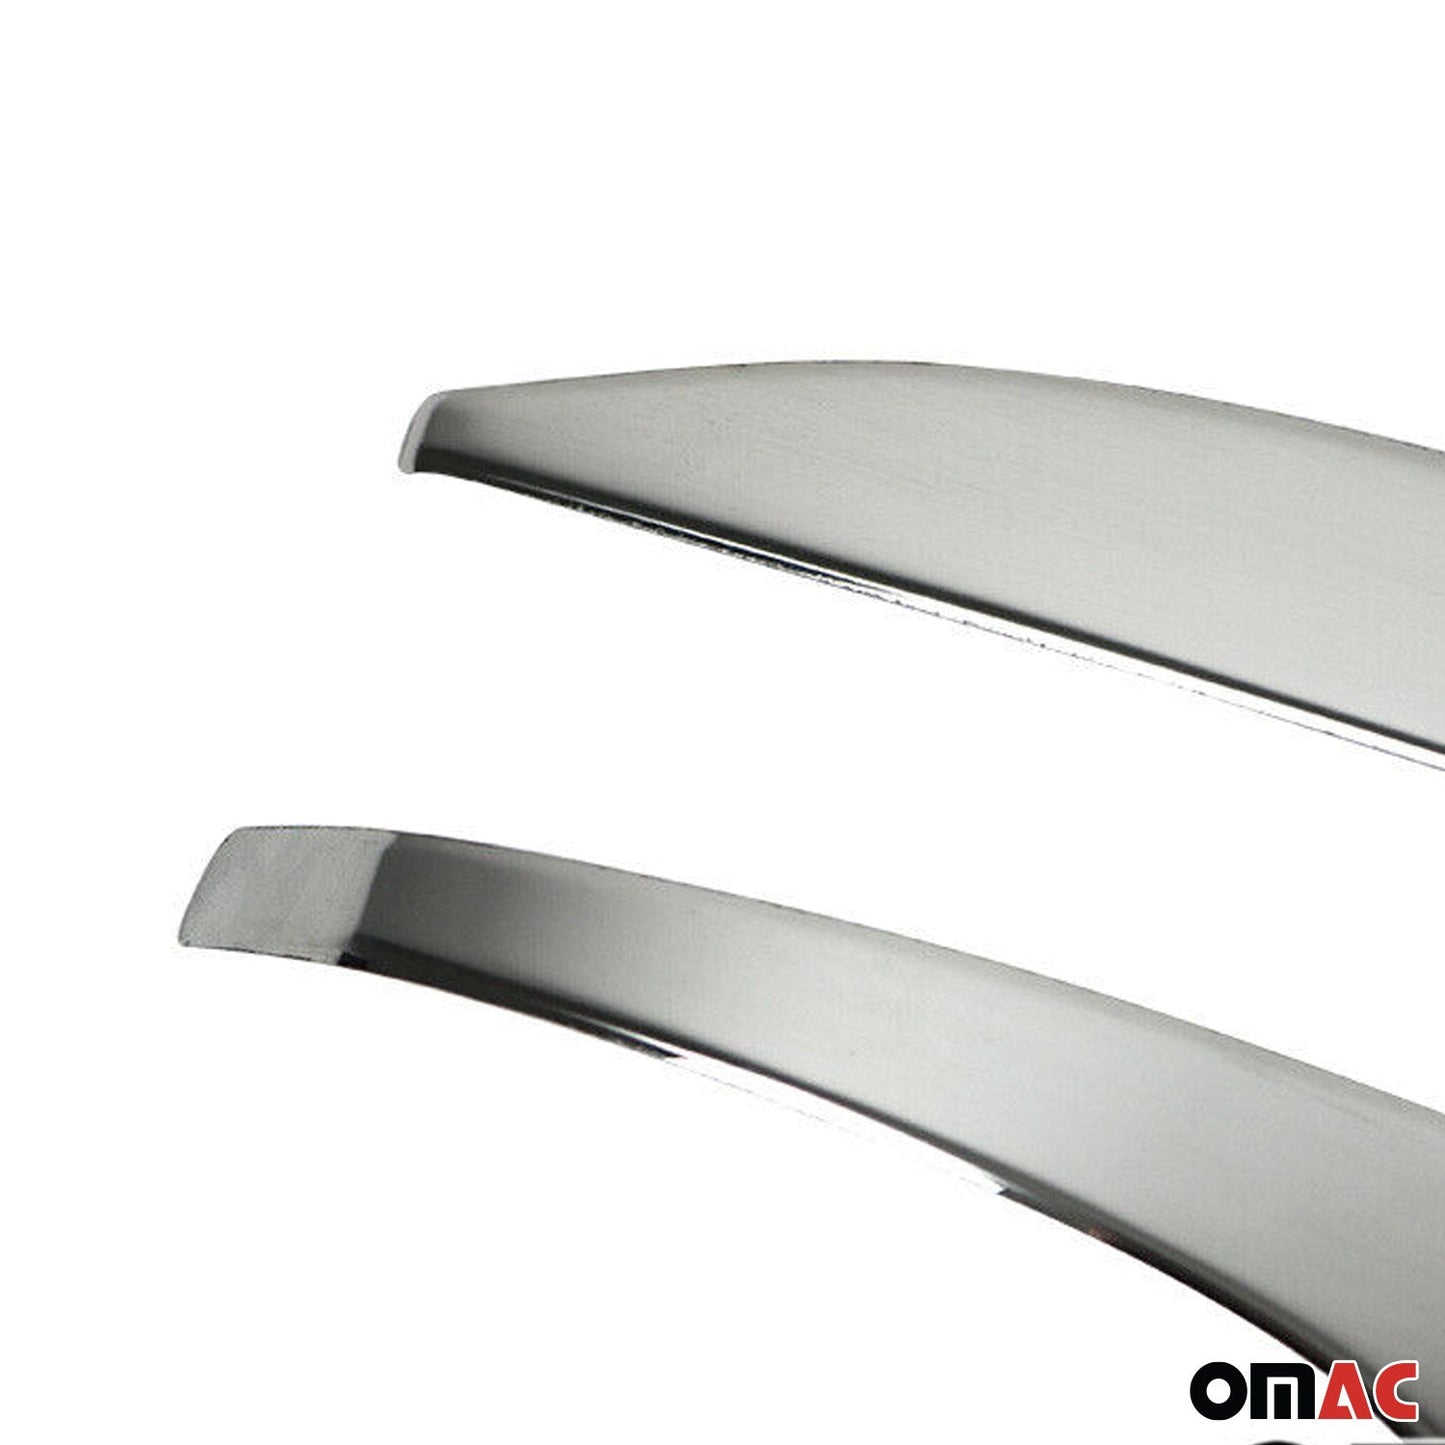 OMAC Side Mirror Cover Caps Fits Toyota RAV4 2013-2018 Steel Silver 2 Pcs 7019115